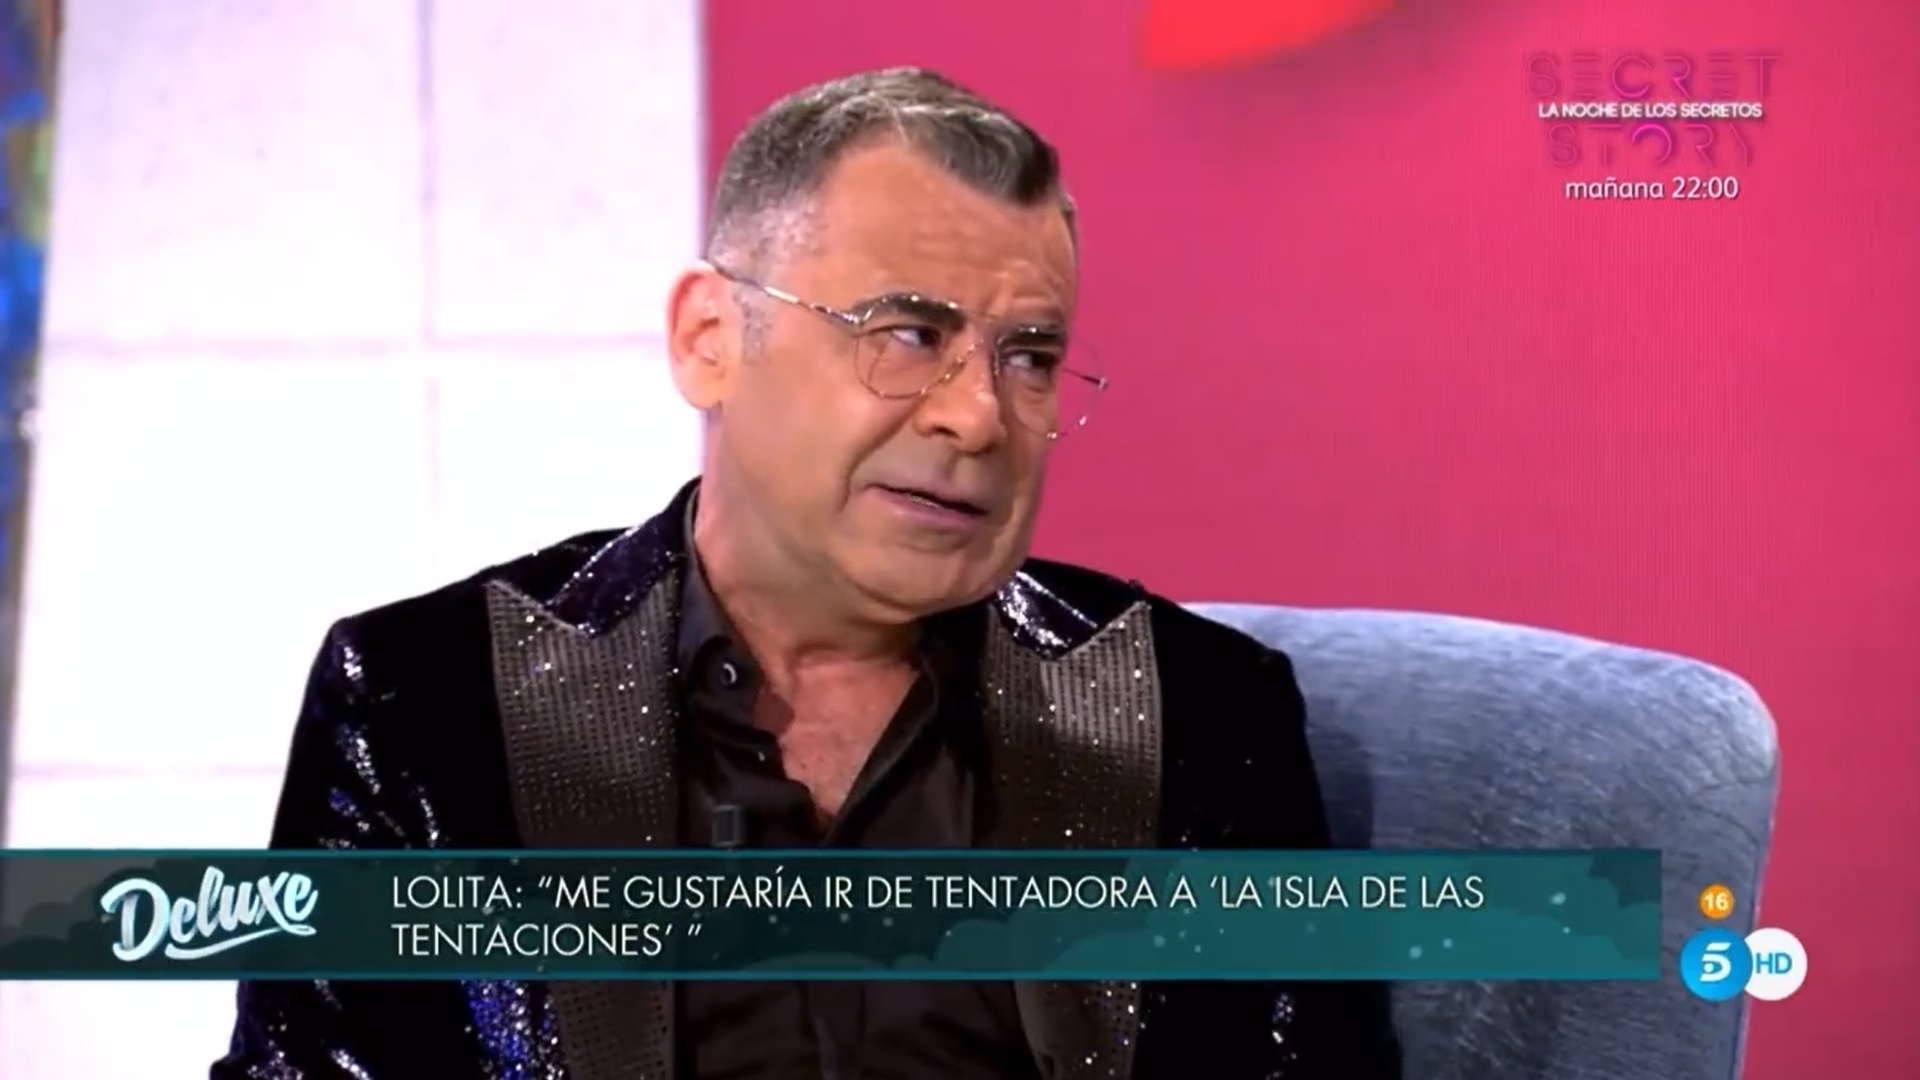 Jorge Javier Antena 3